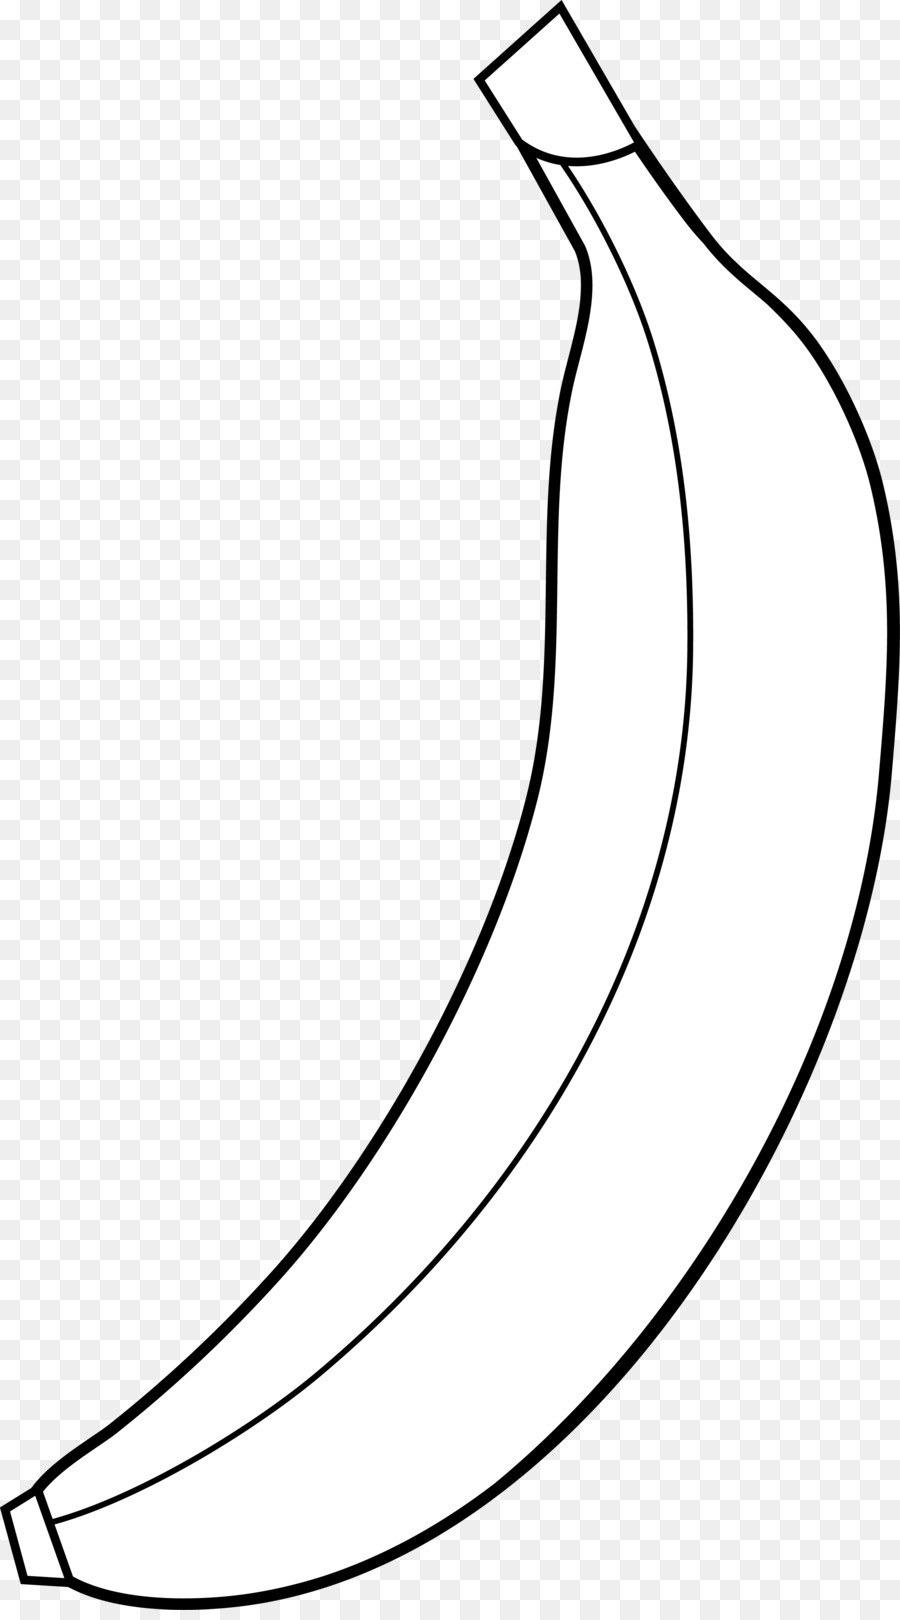 Banana Clipart Black And White clipart